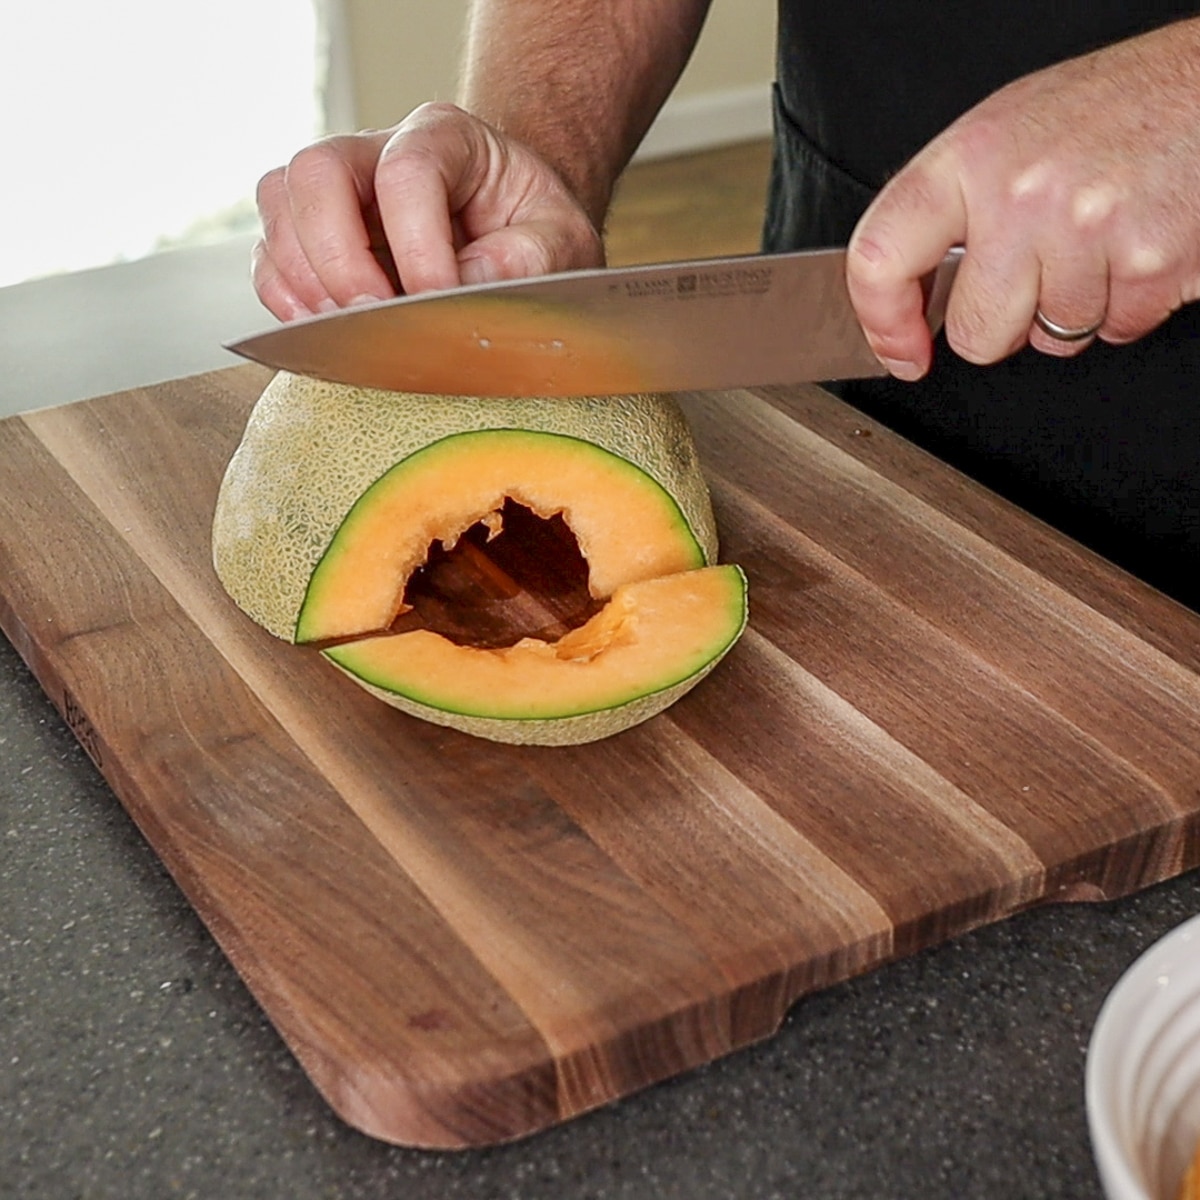 slicing the cantaloupe